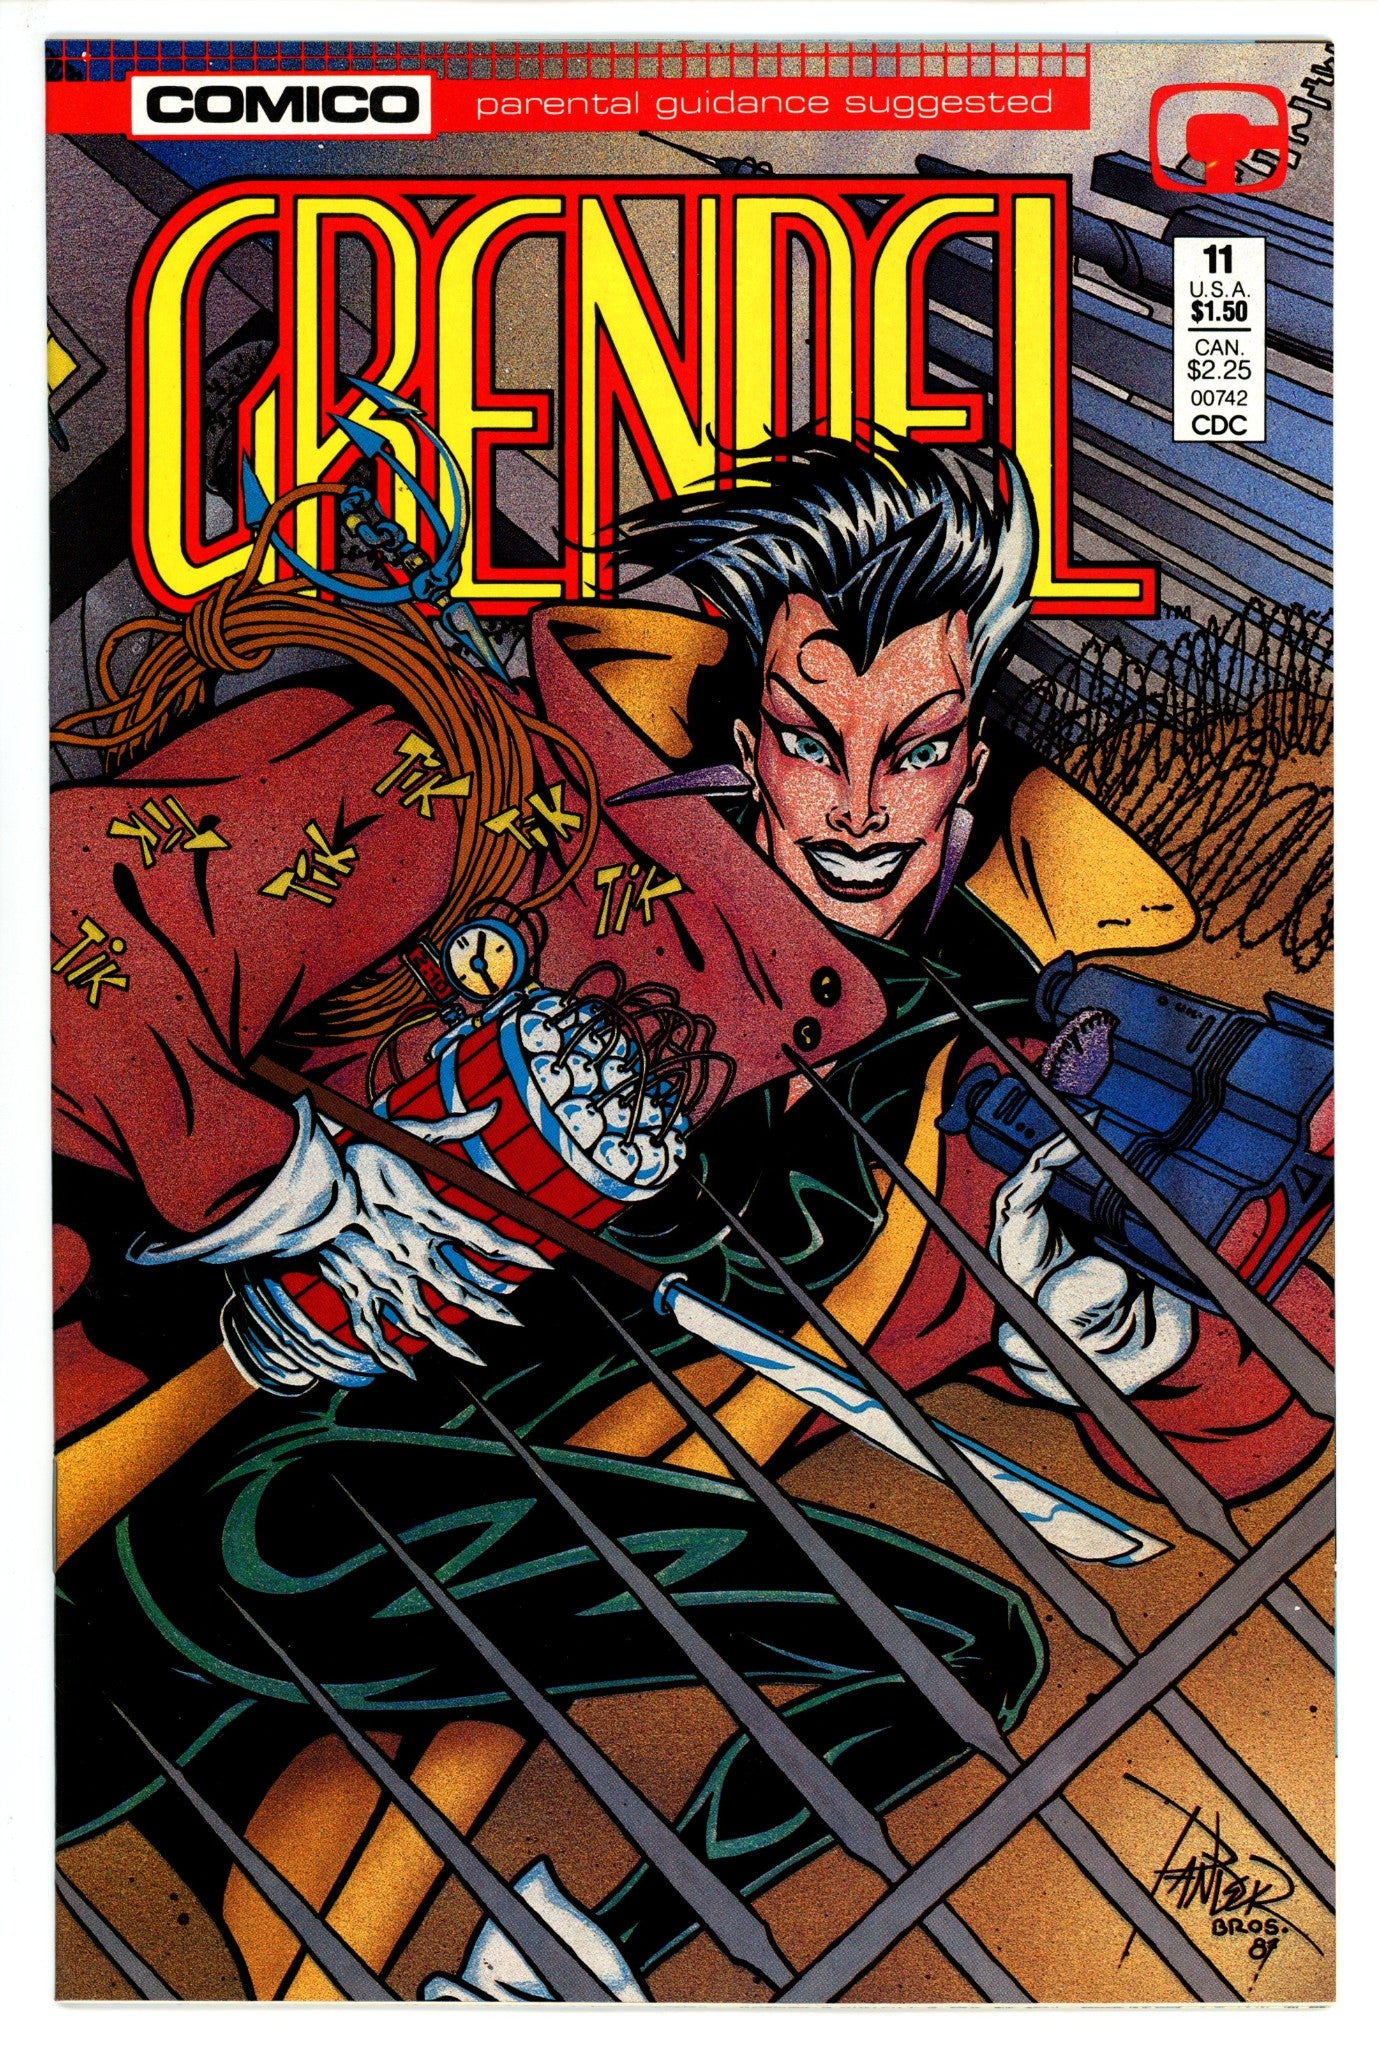 Grendel Vol 2 11 (1987)